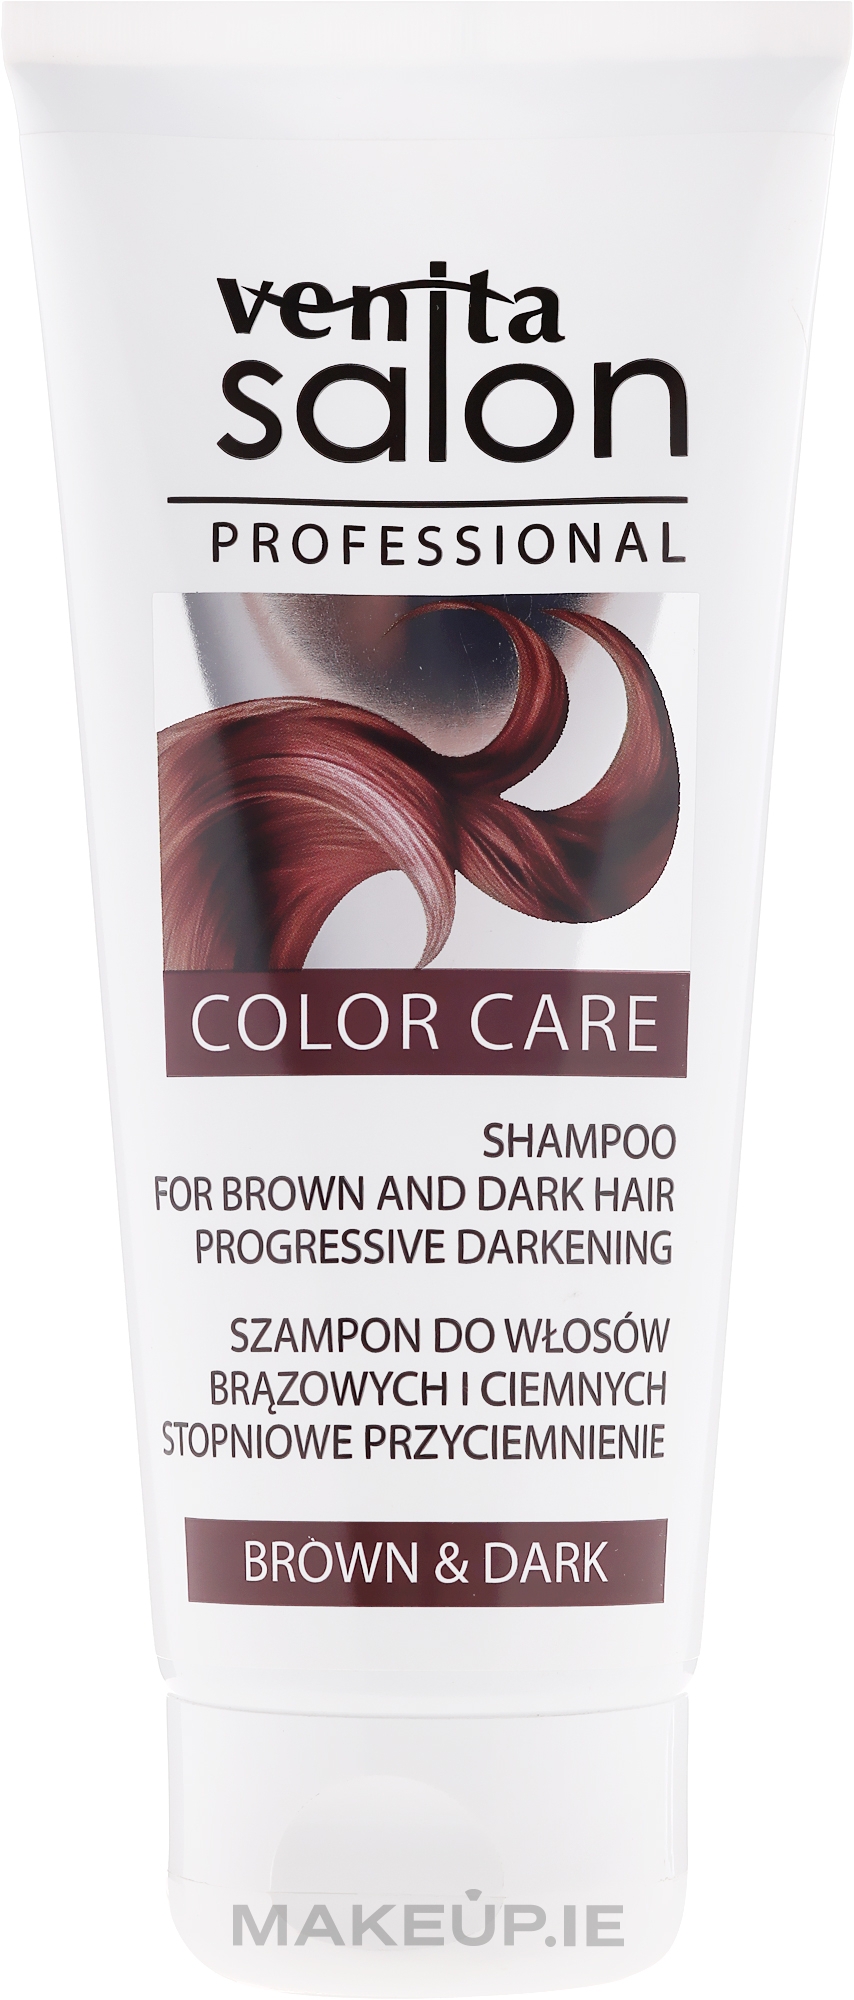 venita salon color care szampon